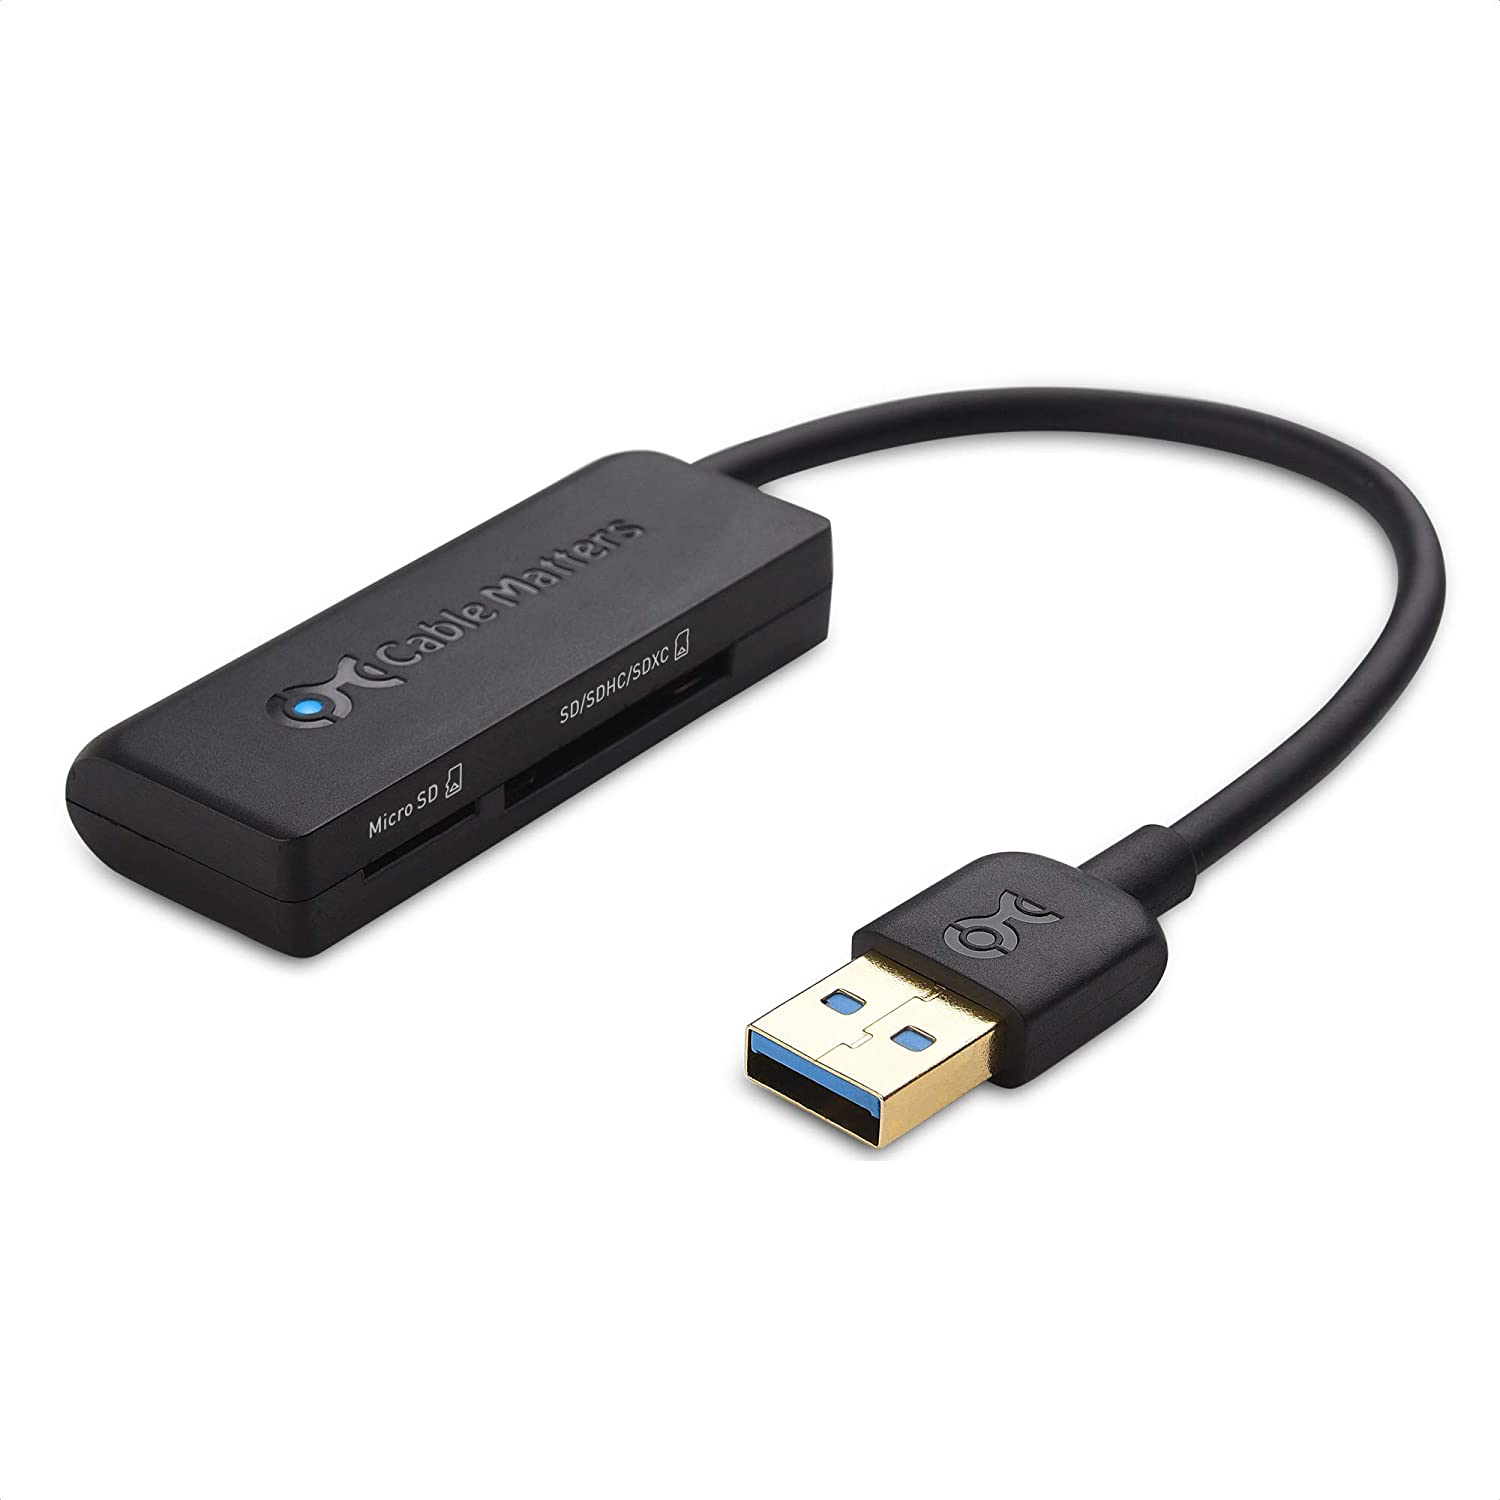 Cable Matters Dual USB Card Reader (USB Card USB 3 Card Reader, Micro